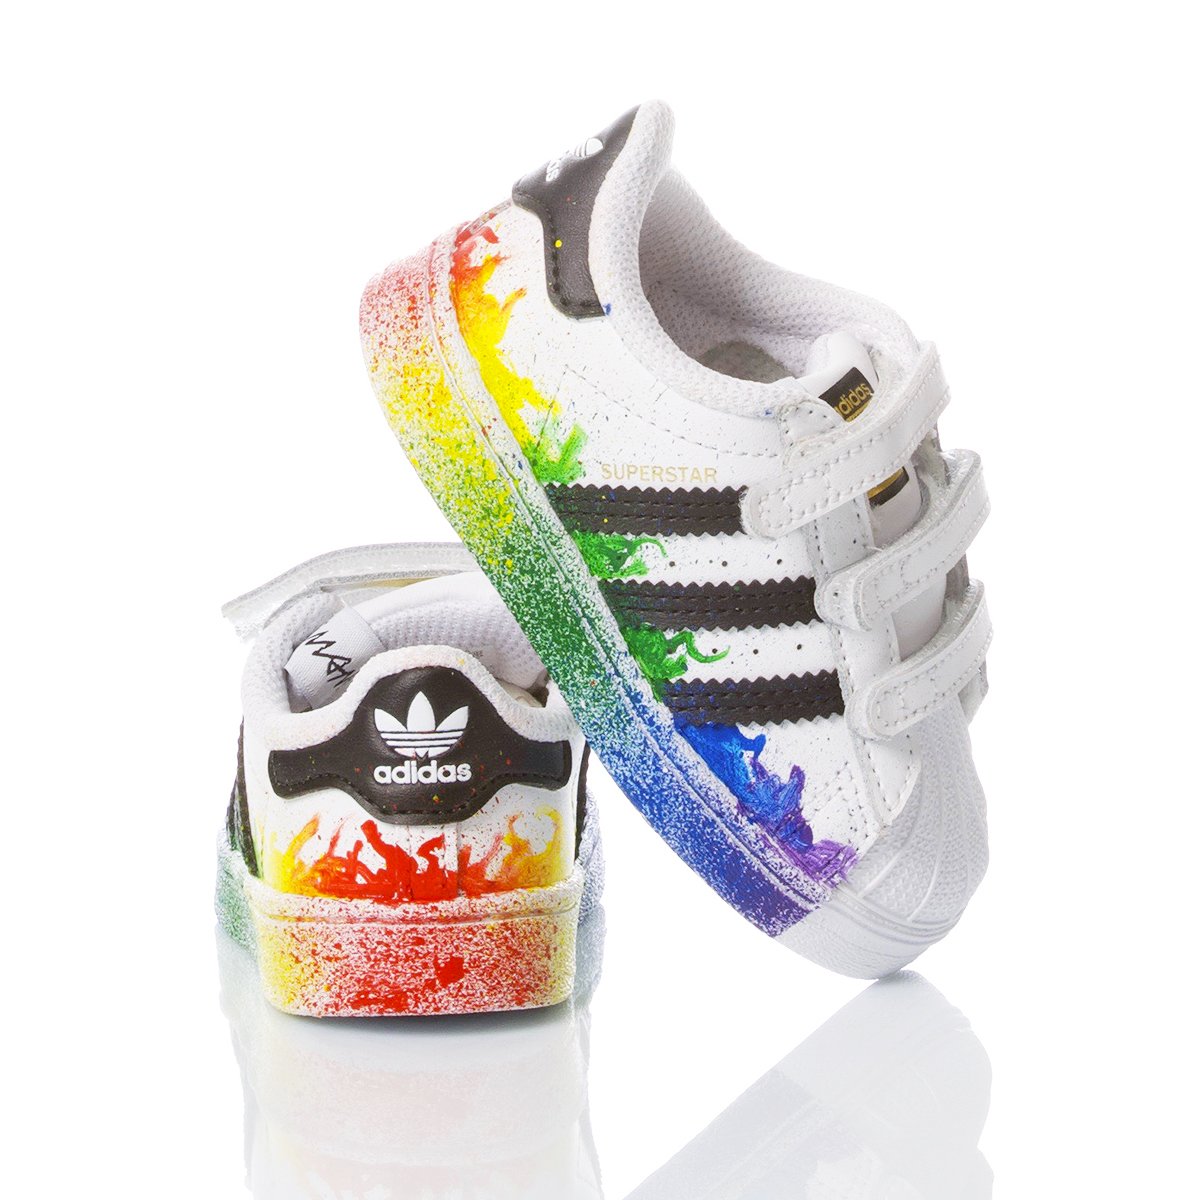 Adidas Superstar Baby Split Superstar Painted, Special